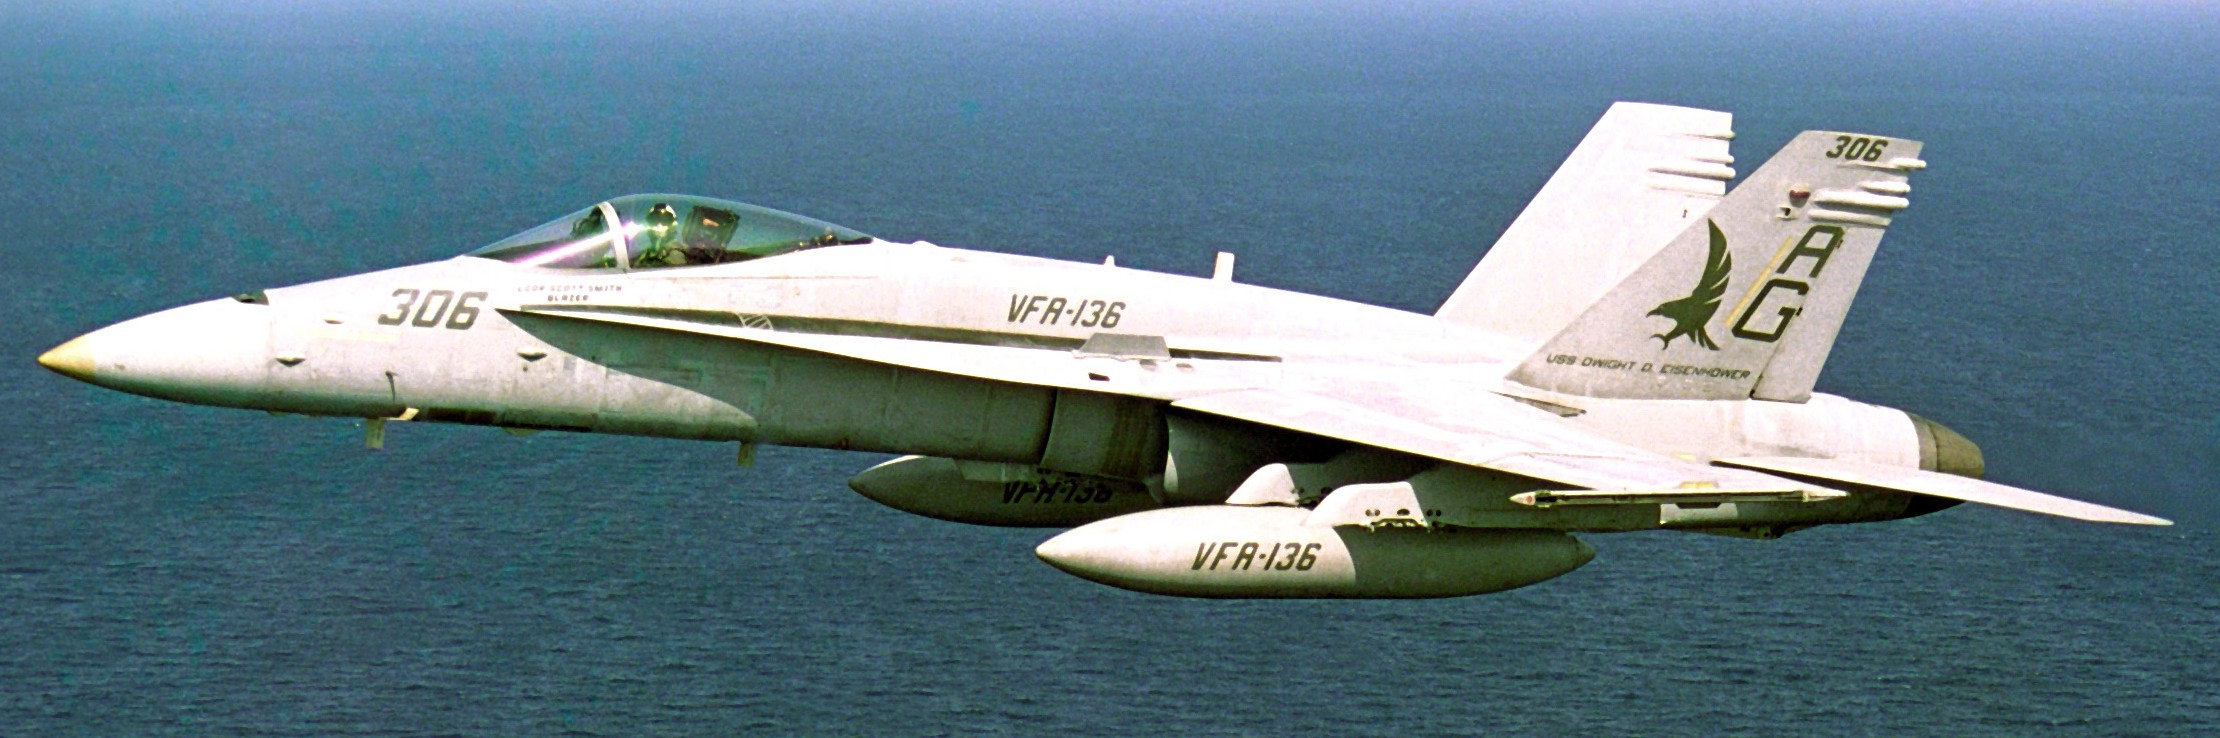 vfa-136 knighthawks strike fighter squadron f/a-18c hornet 1992 114 cvw-7 uss dwight d. eisenhower cvn-69